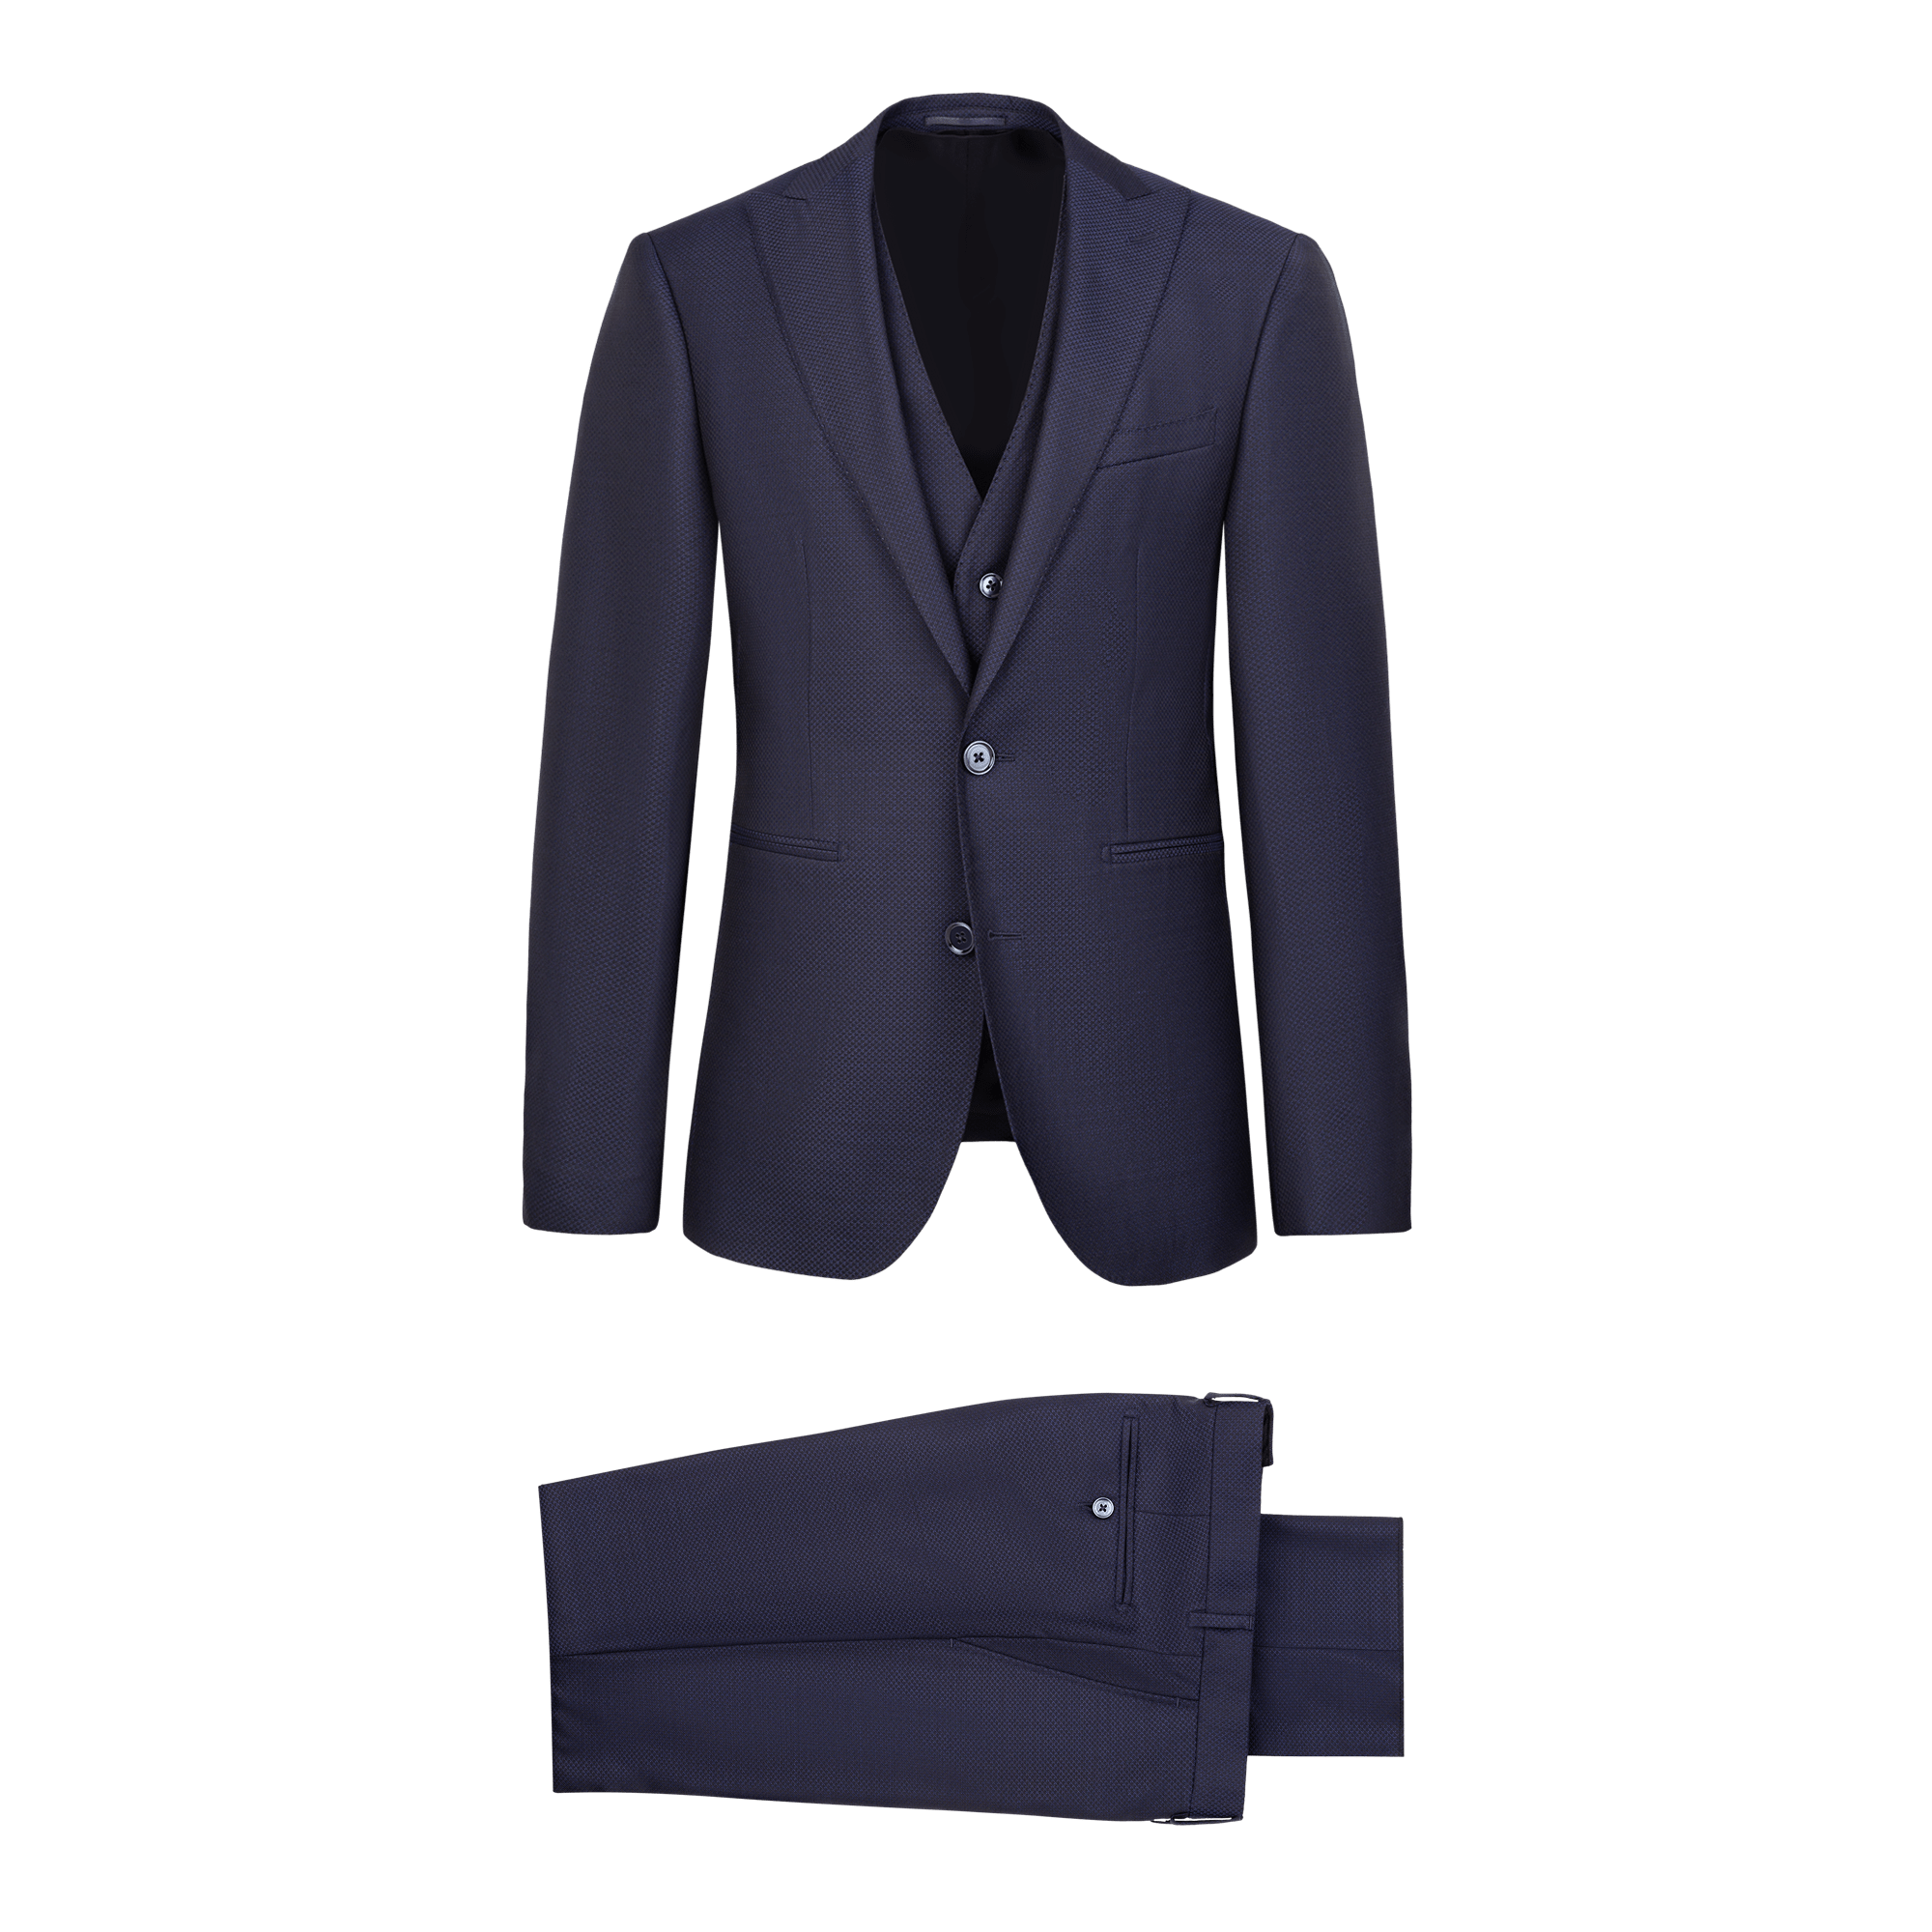 Men's Jacquard Blue 3 Piece Suit | Tailored Italian Suits